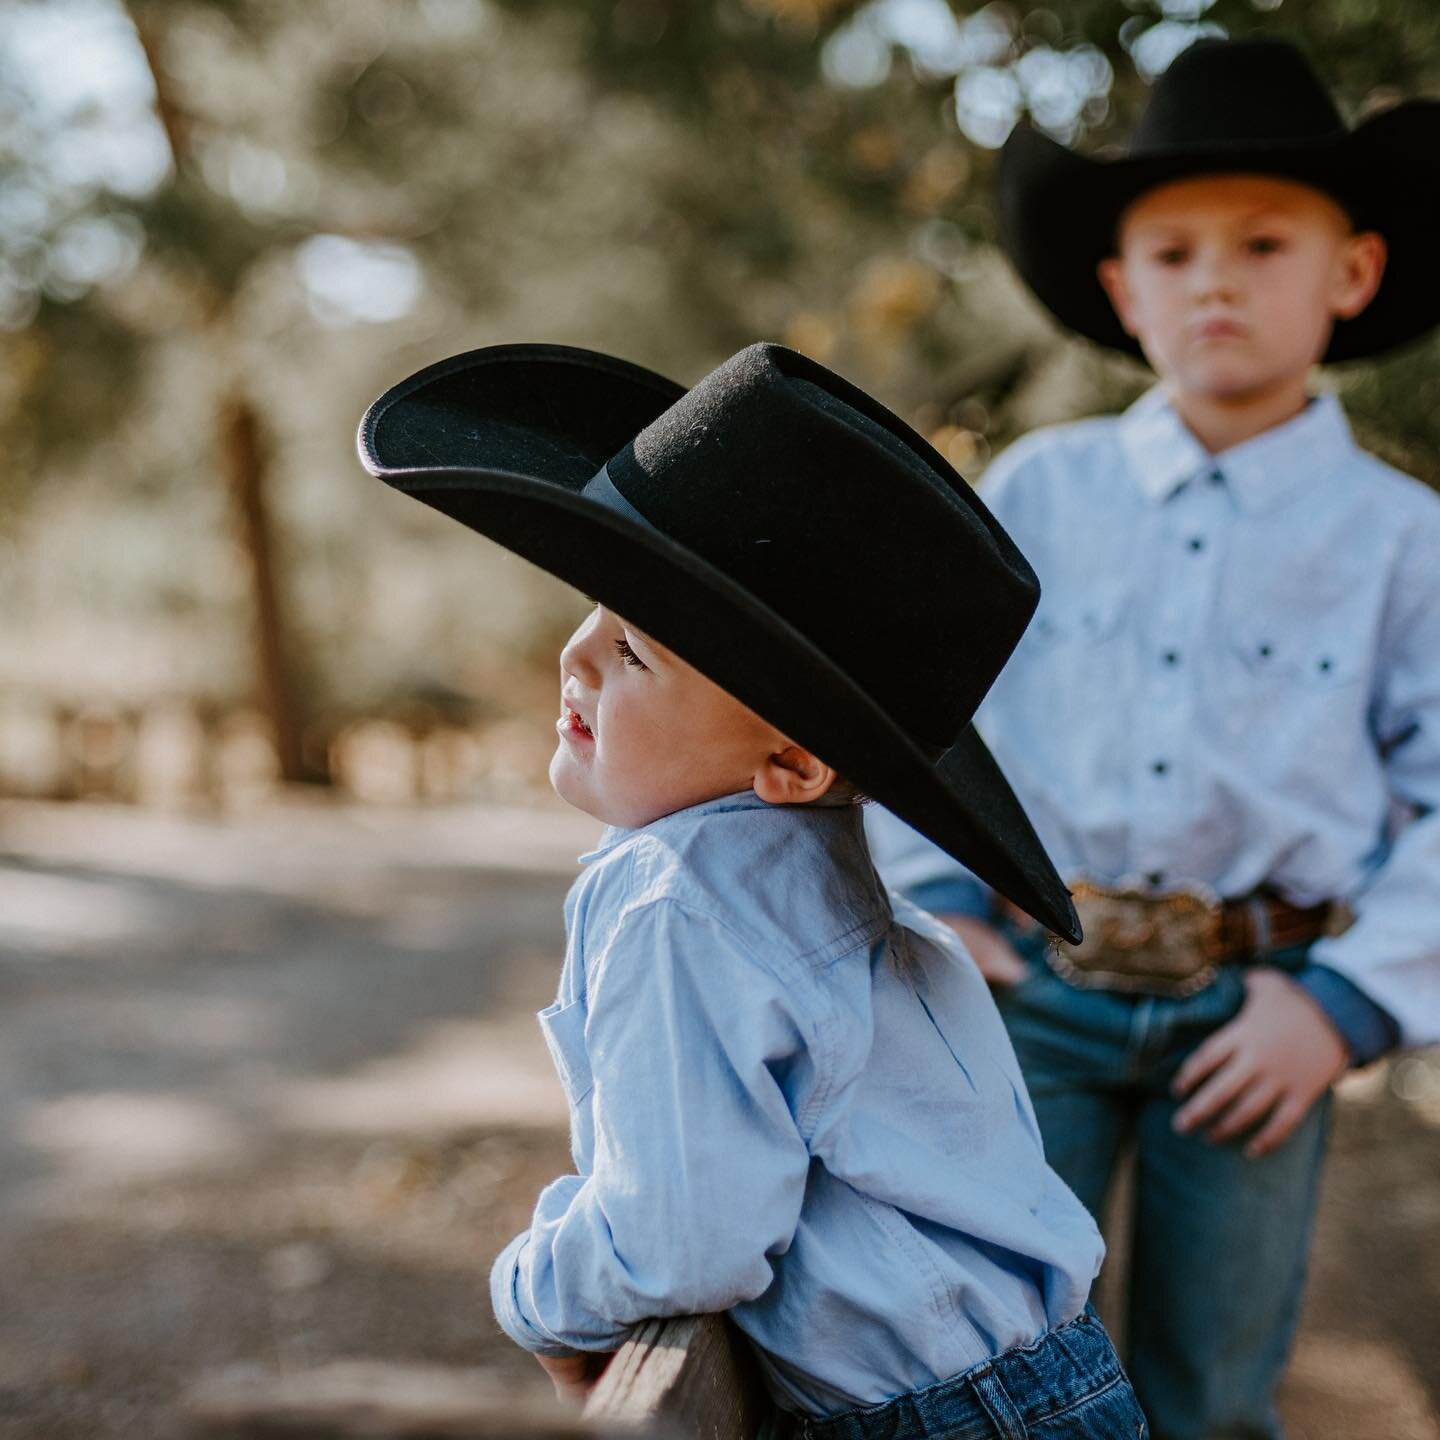 Teeny cowboys 🥰 
.
.
.
.
.
#familyphotography #futurecowboy #ranchlife #photography #emmawolfphotography #lifestylephotography